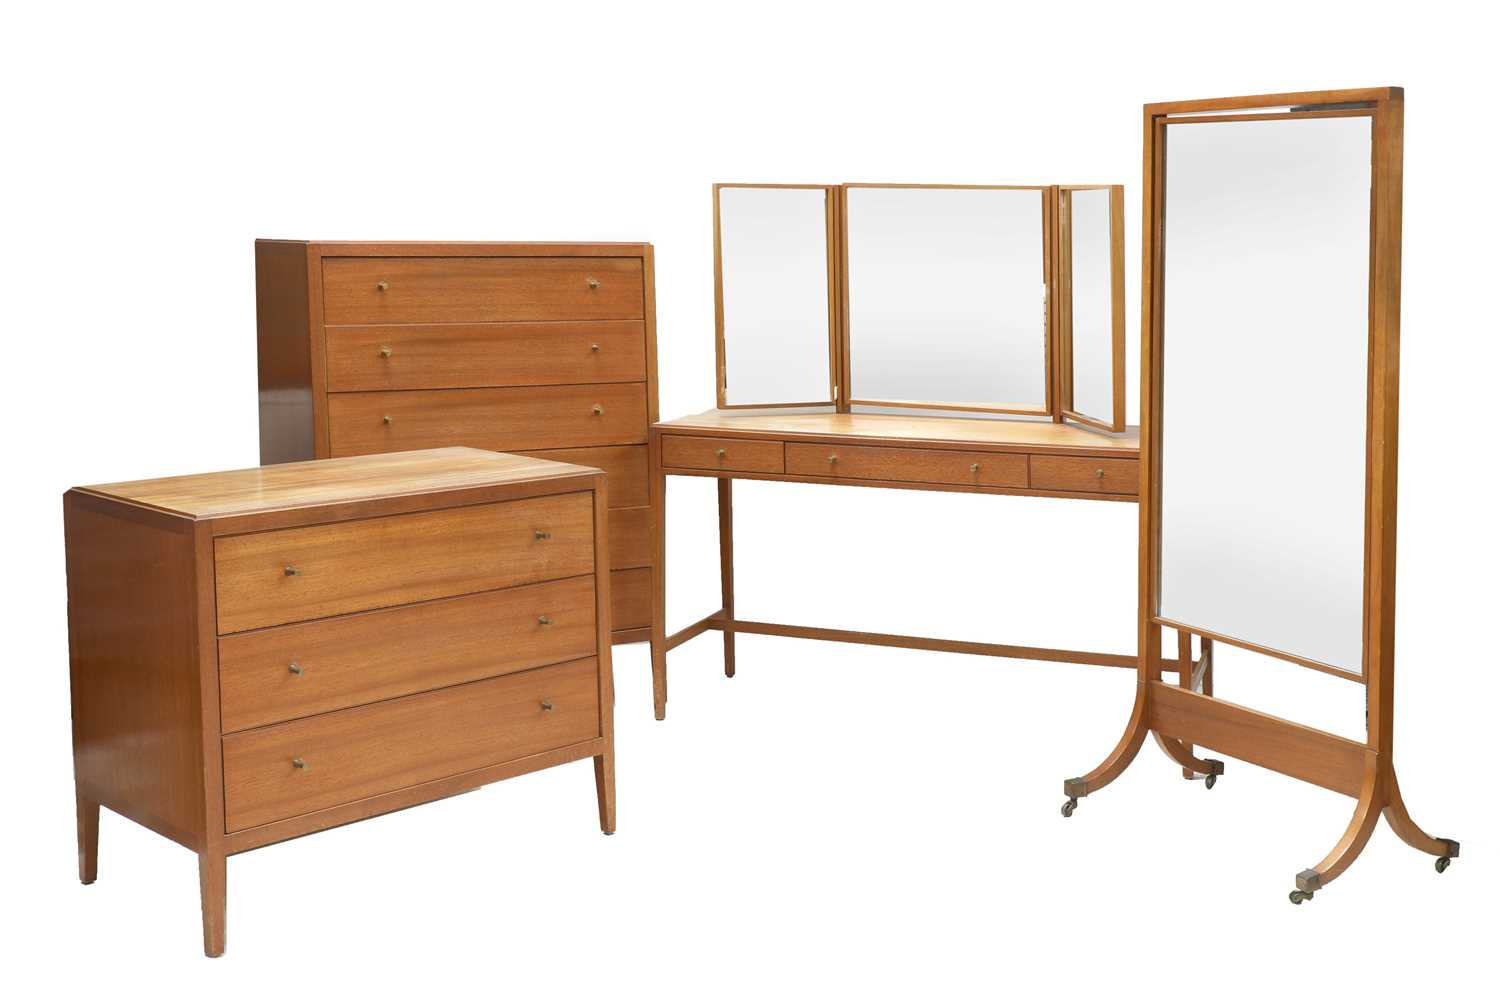 gordon russell bedroom furniture